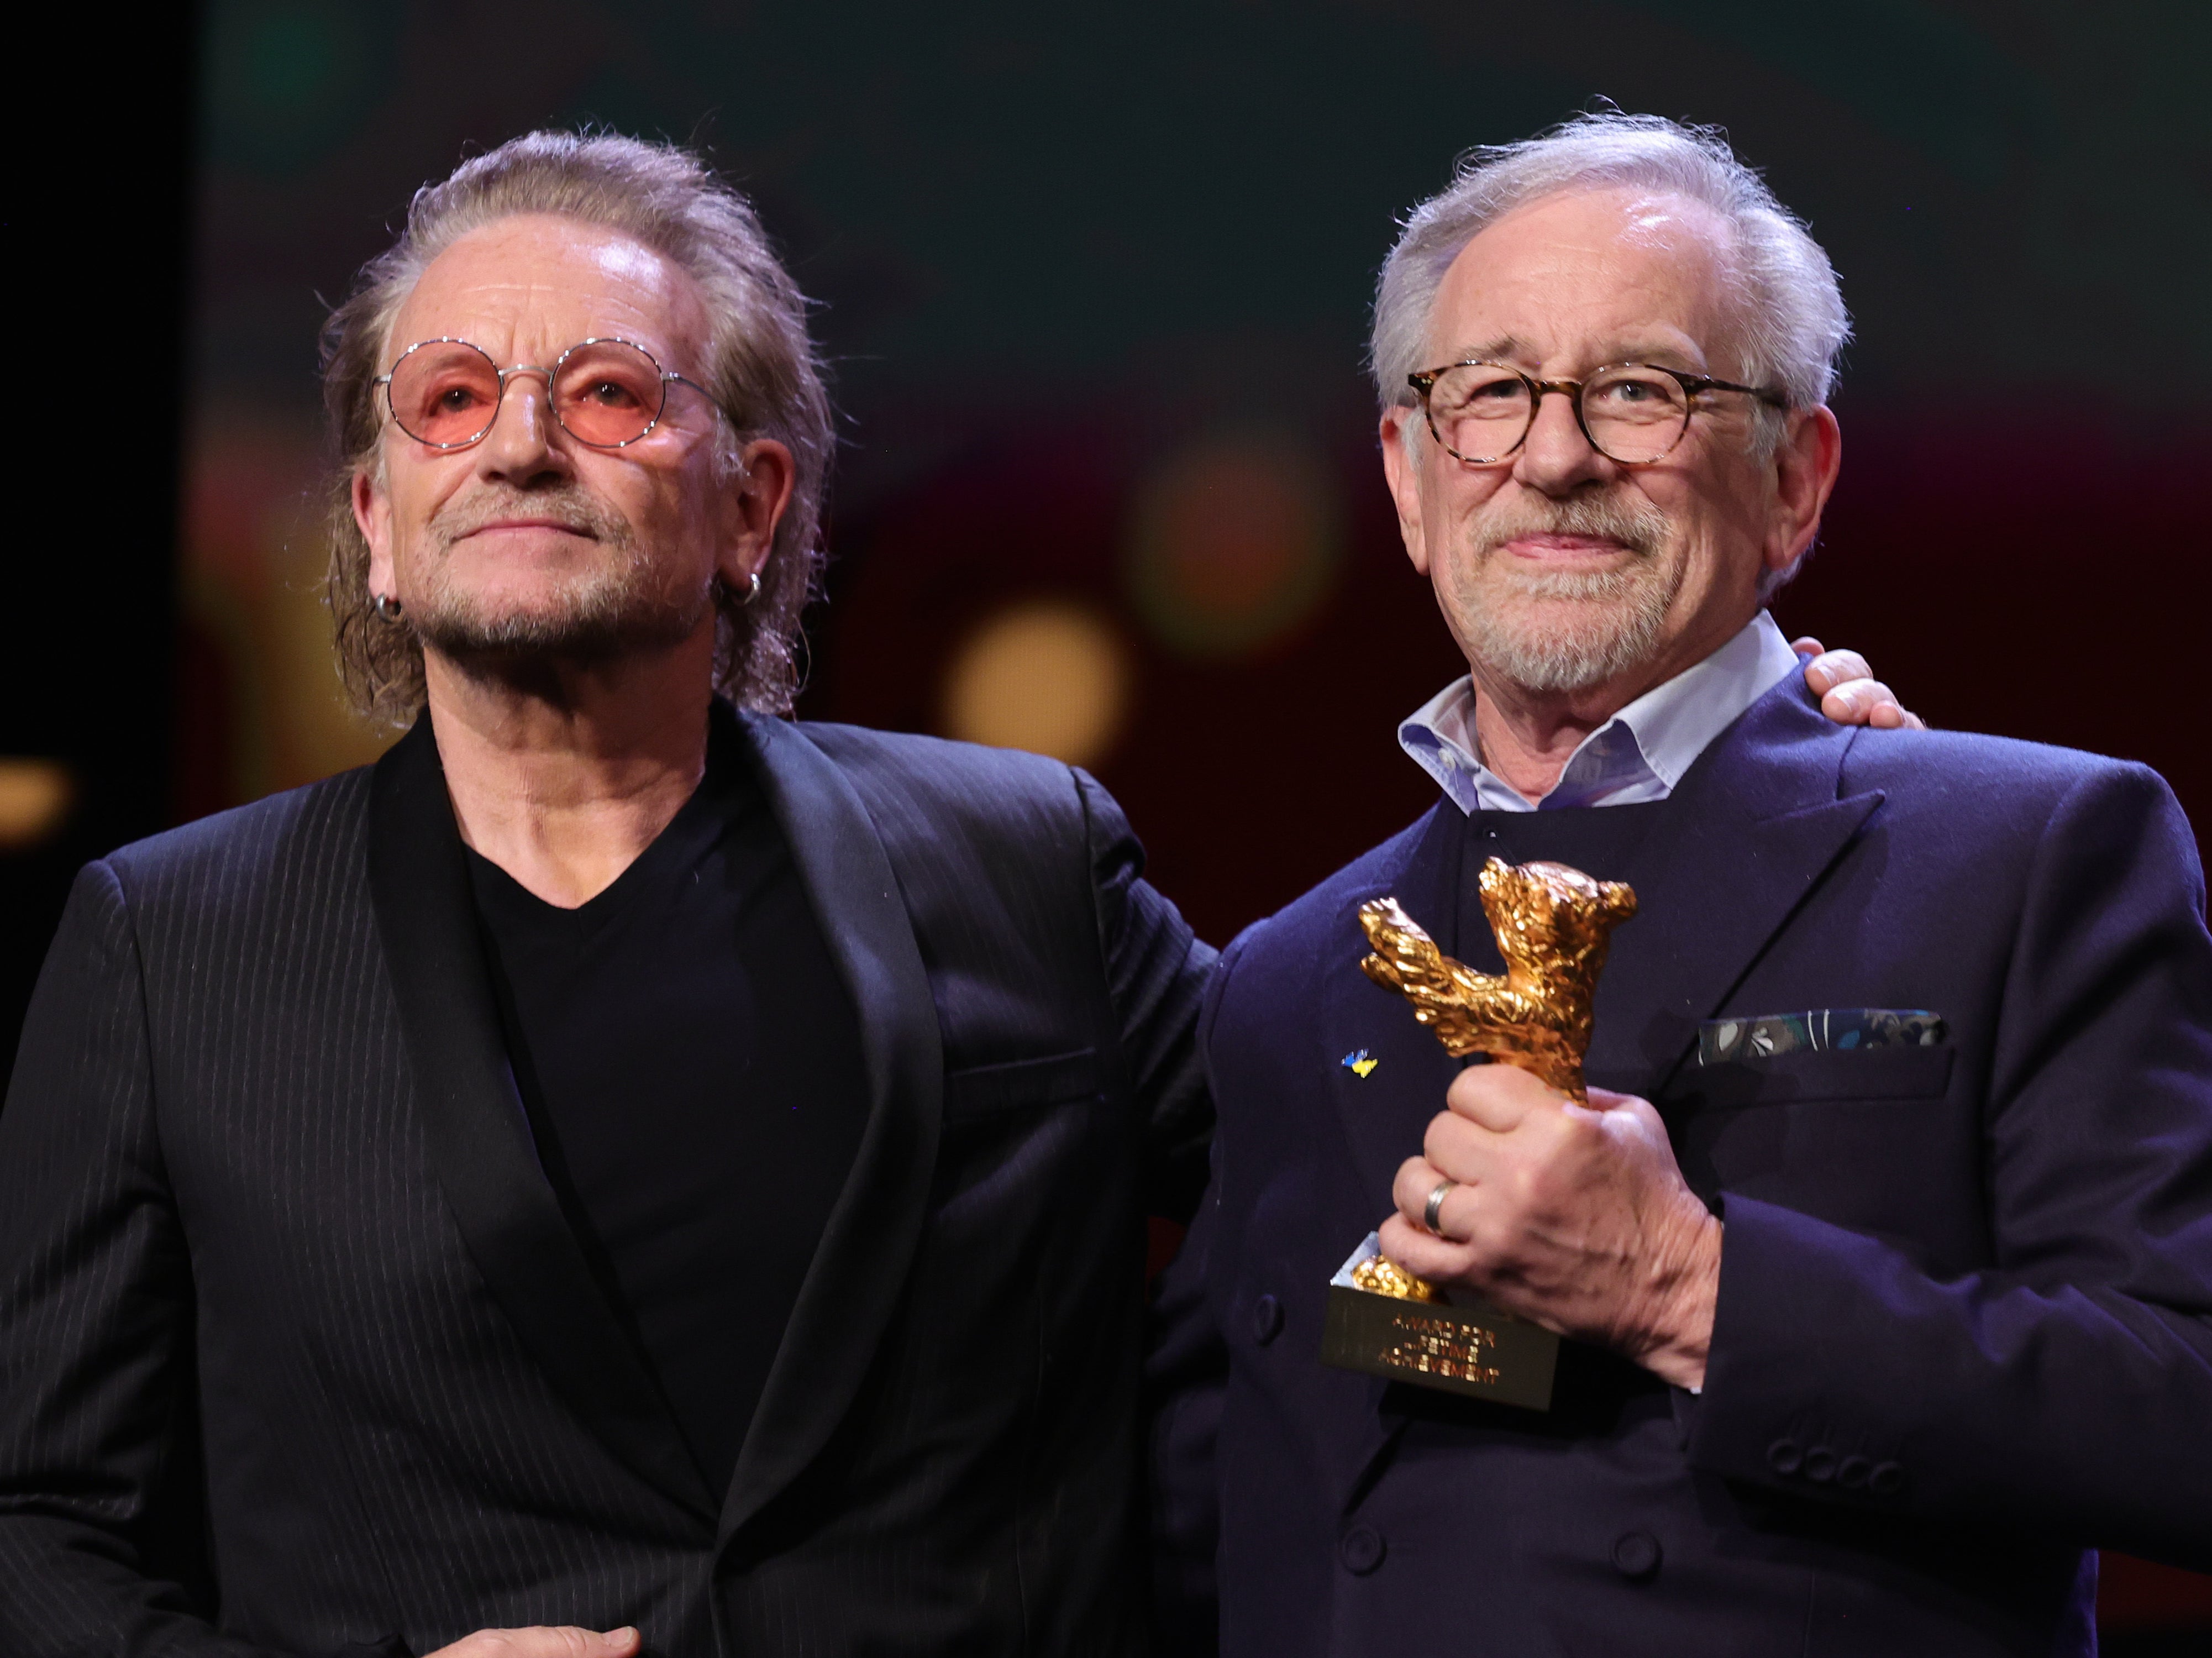 Bono awarding Steven Spielberg with the Golden Bear award at Berlinale